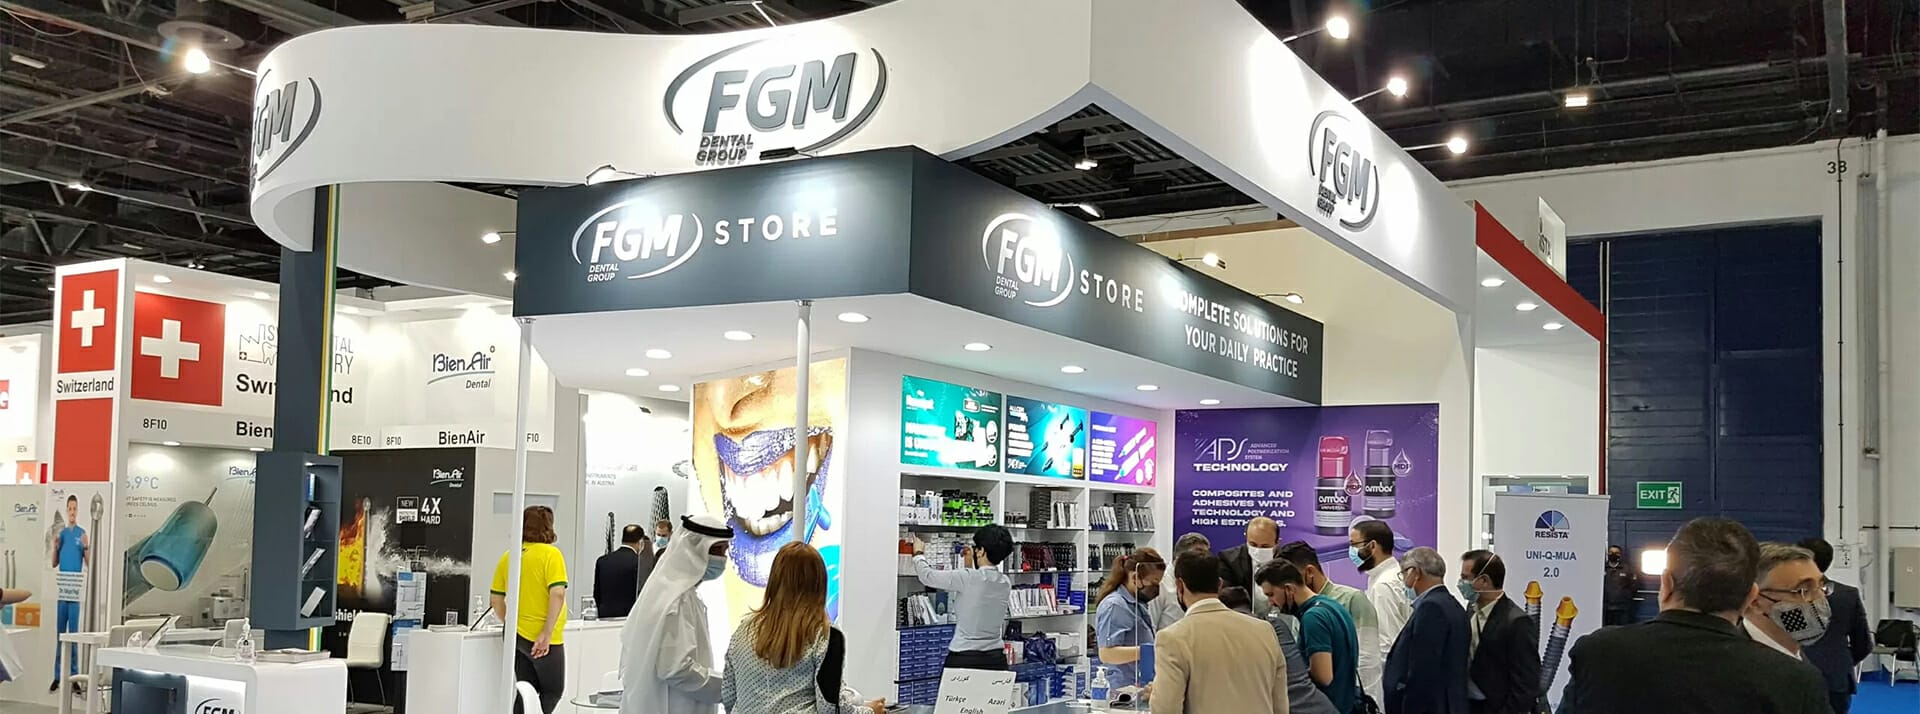 FGM Dental Group, a brand strengthening its global presence